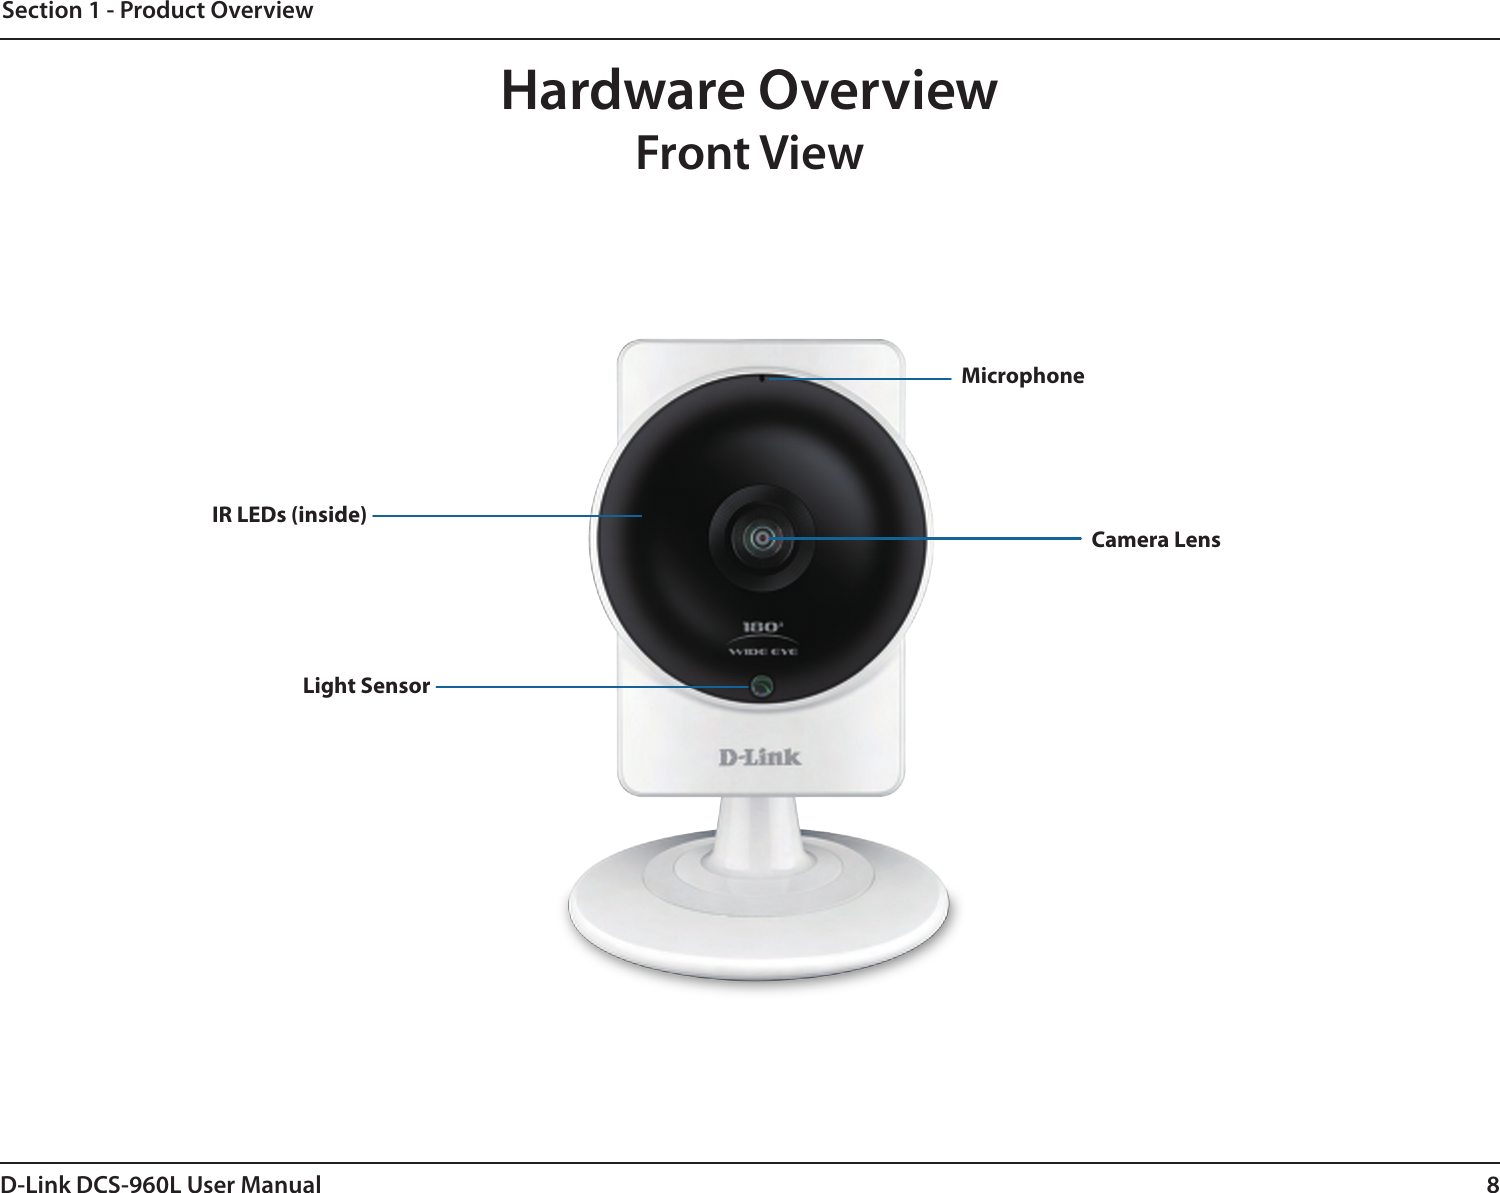 8D-Link DCS-960L User ManualSection 1 - Product OverviewHardware OverviewFront ViewCamera LensMicrophoneIR LEDs (inside)Light Sensor